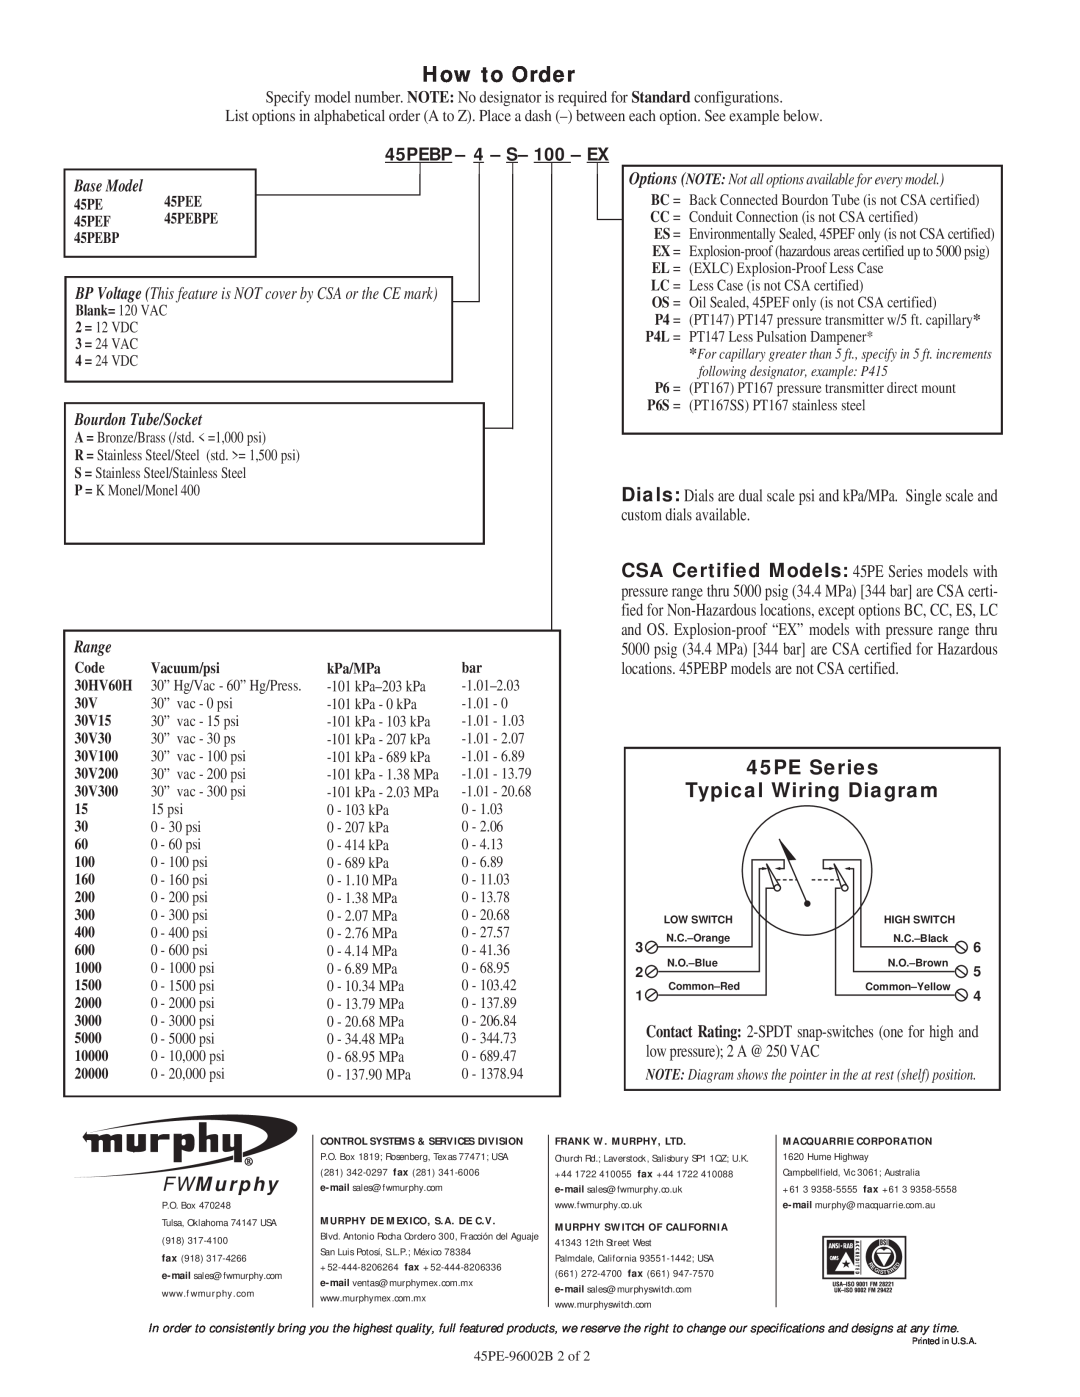 Murphy How to Order, 45PEBP - 4 - S- 100 - EX, 45PE Series Typical Wiring Diagram, FWMurphy, Base Model, Range 